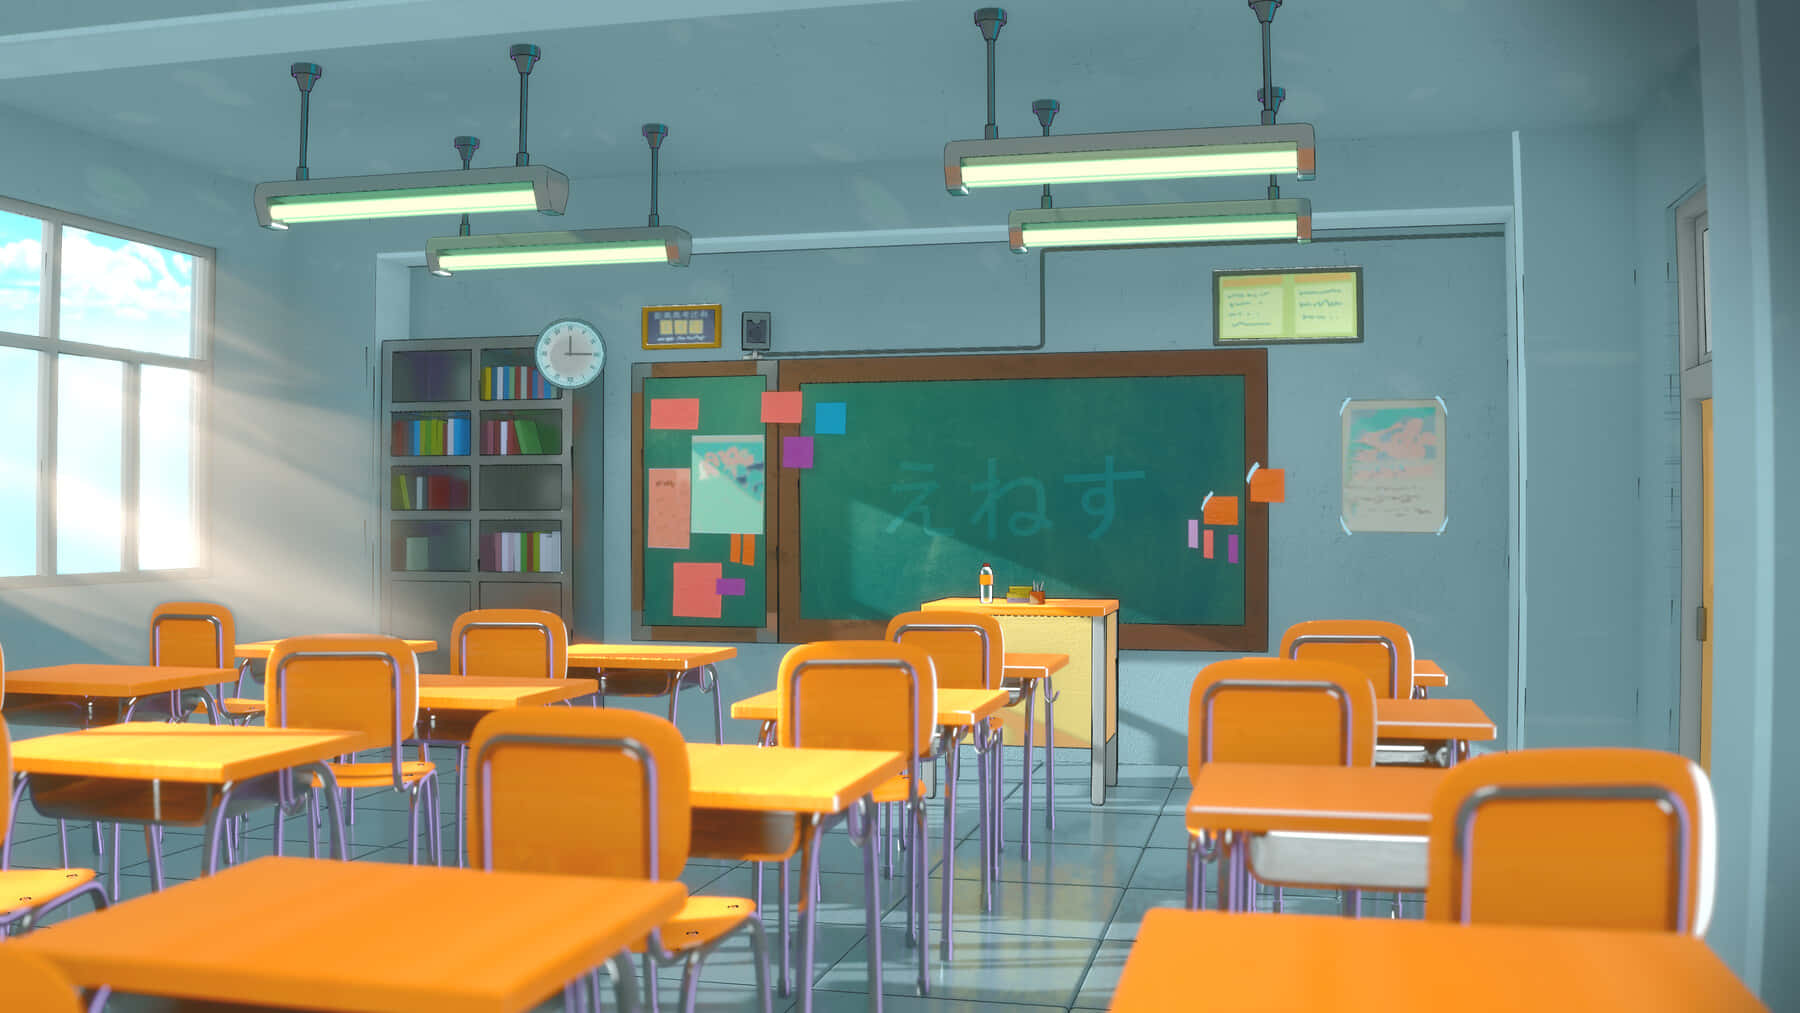 100+] Anime School Backgrounds